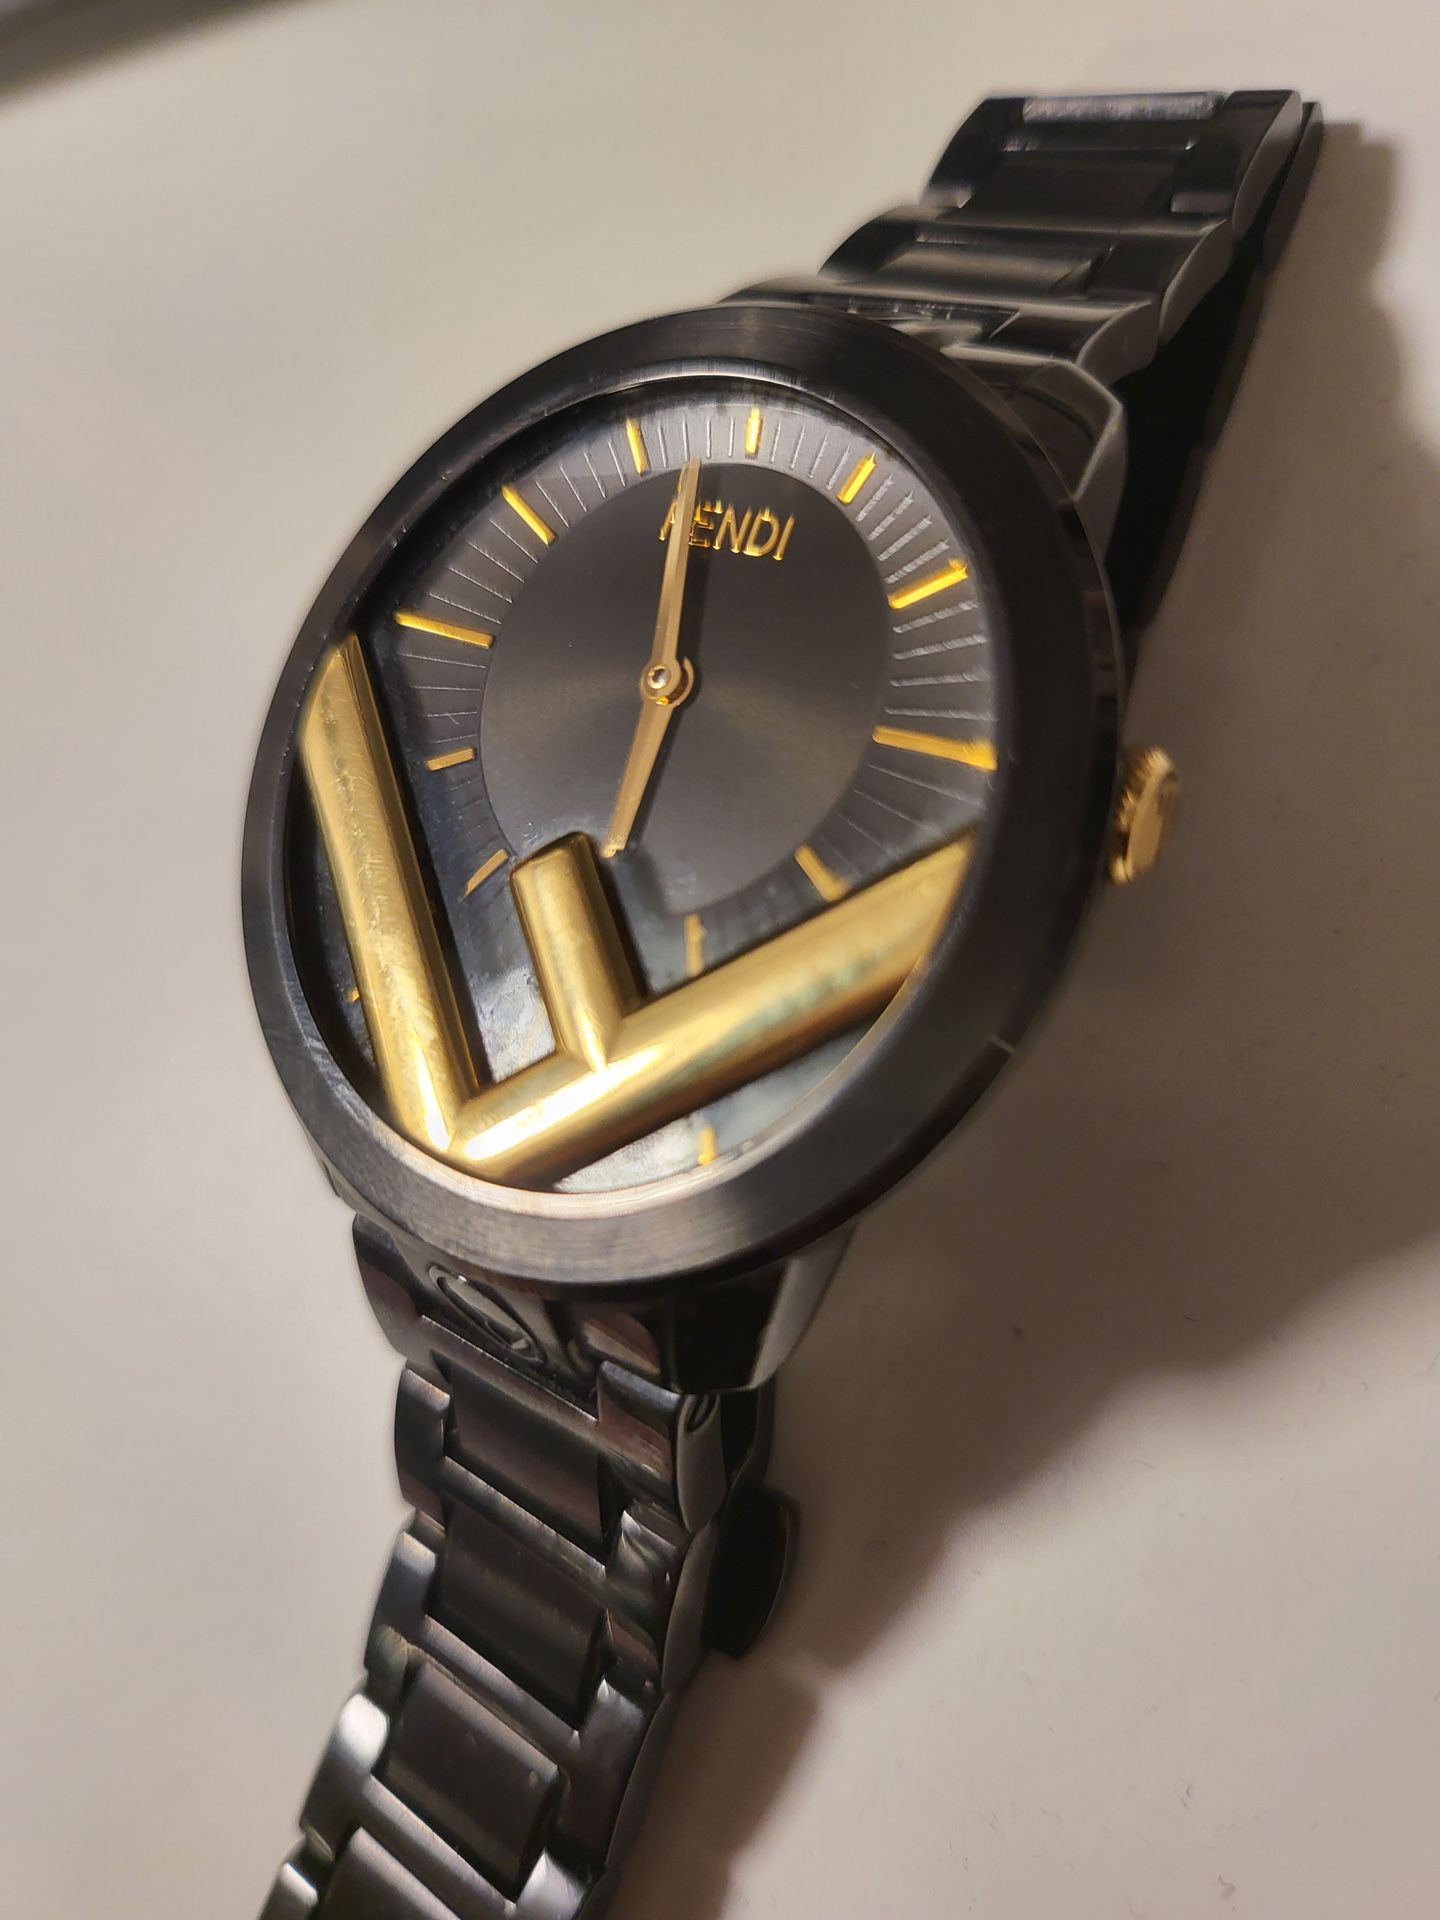 Fendi Watch Used Lite Paid $2000 Asking $450